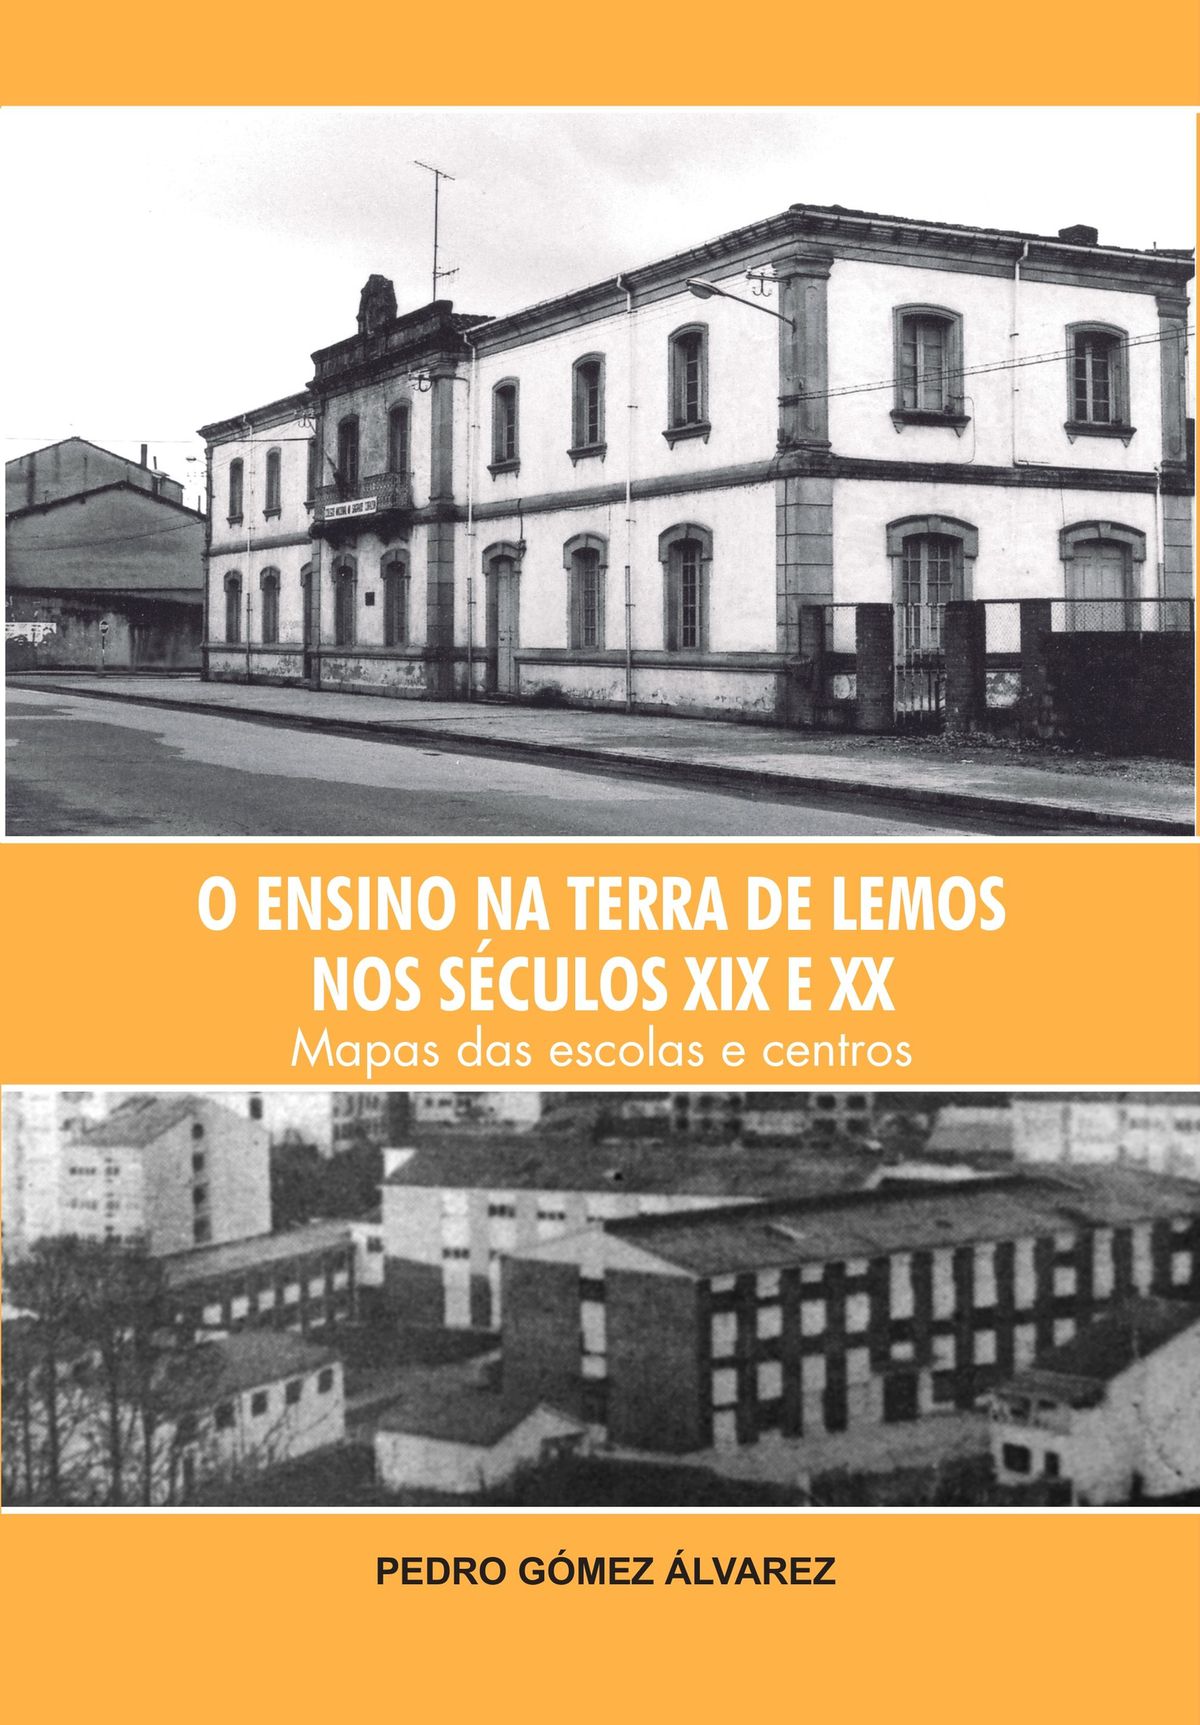 O ensino na terra de Lemos nos séculos XIX e XX (Pedro Gómez Álvarez)